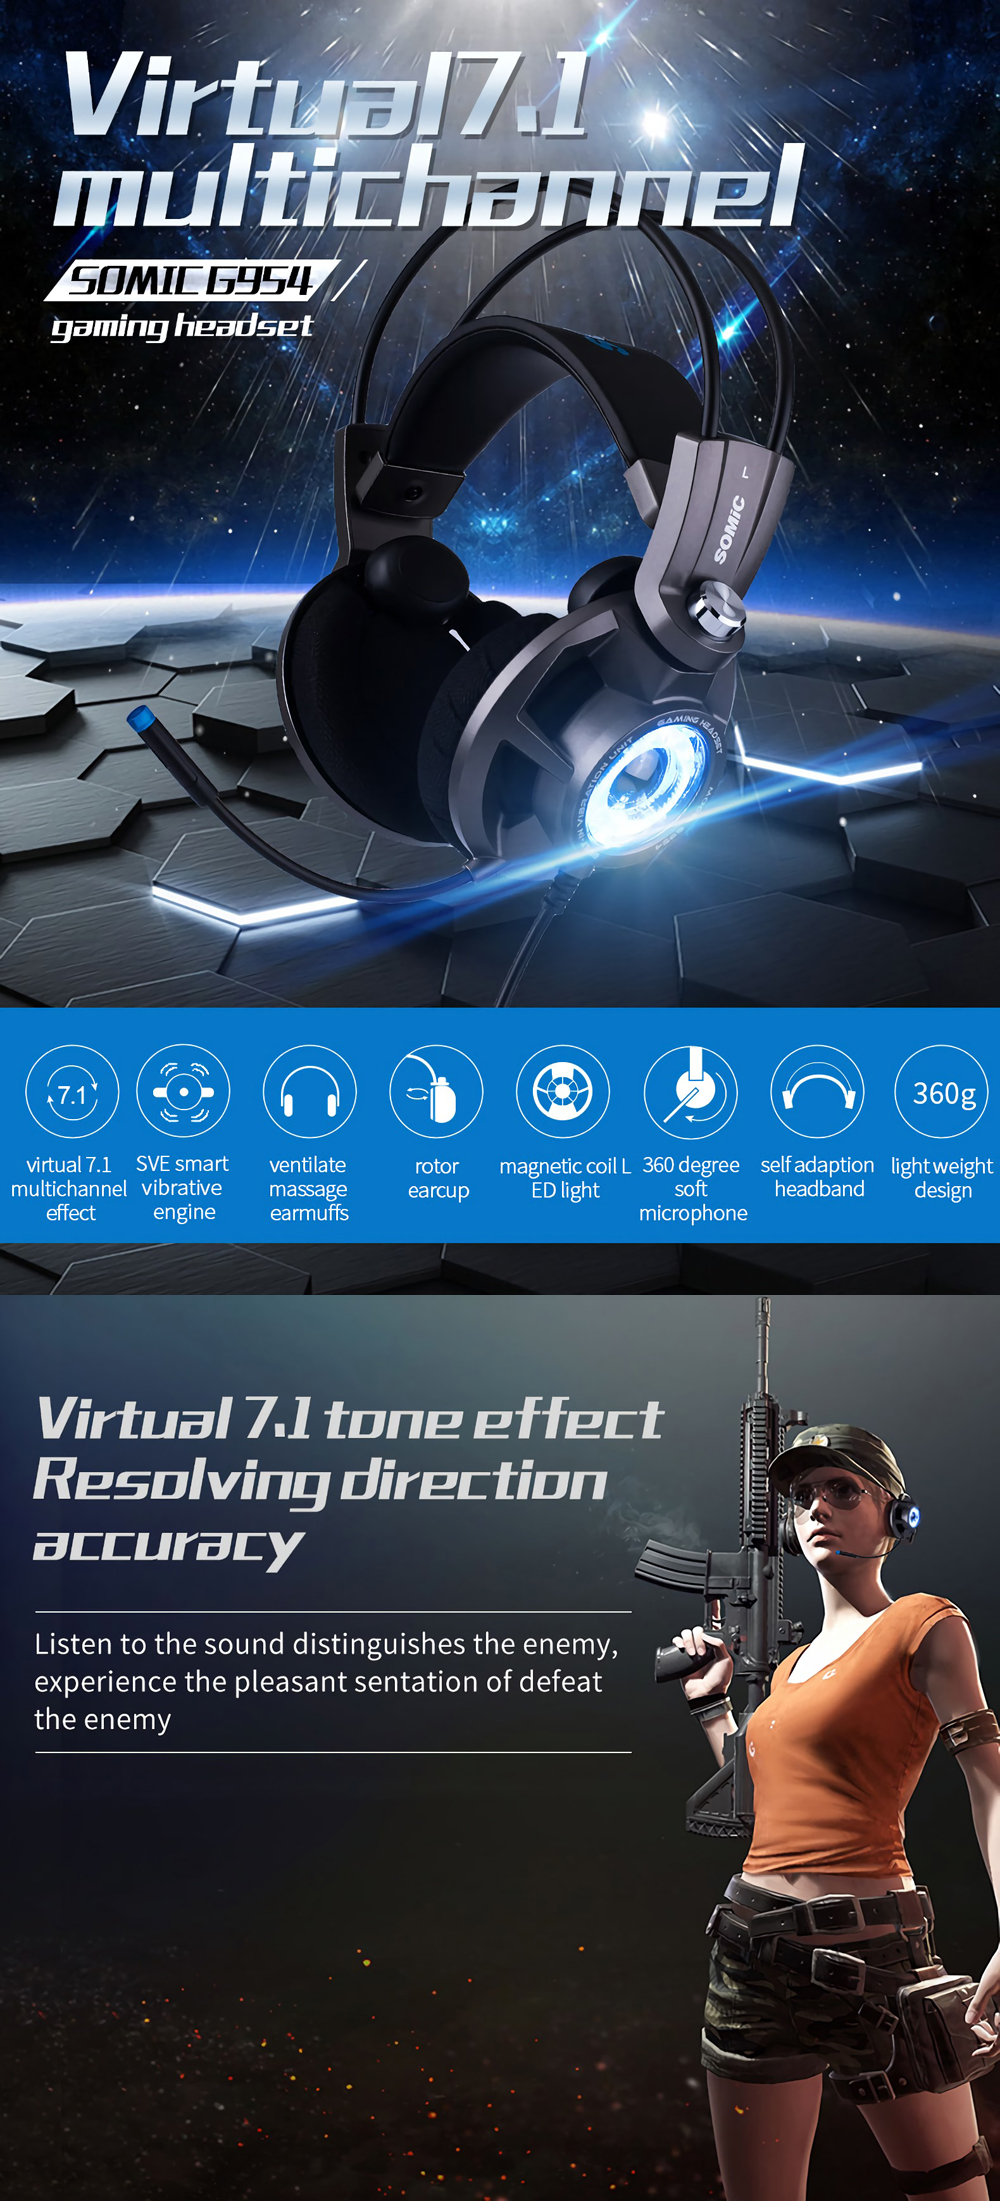 SOMiC G954 USB Wired Virtual 7.1 Surround Sound SVE Vibration Gaming Headphone Headset 19